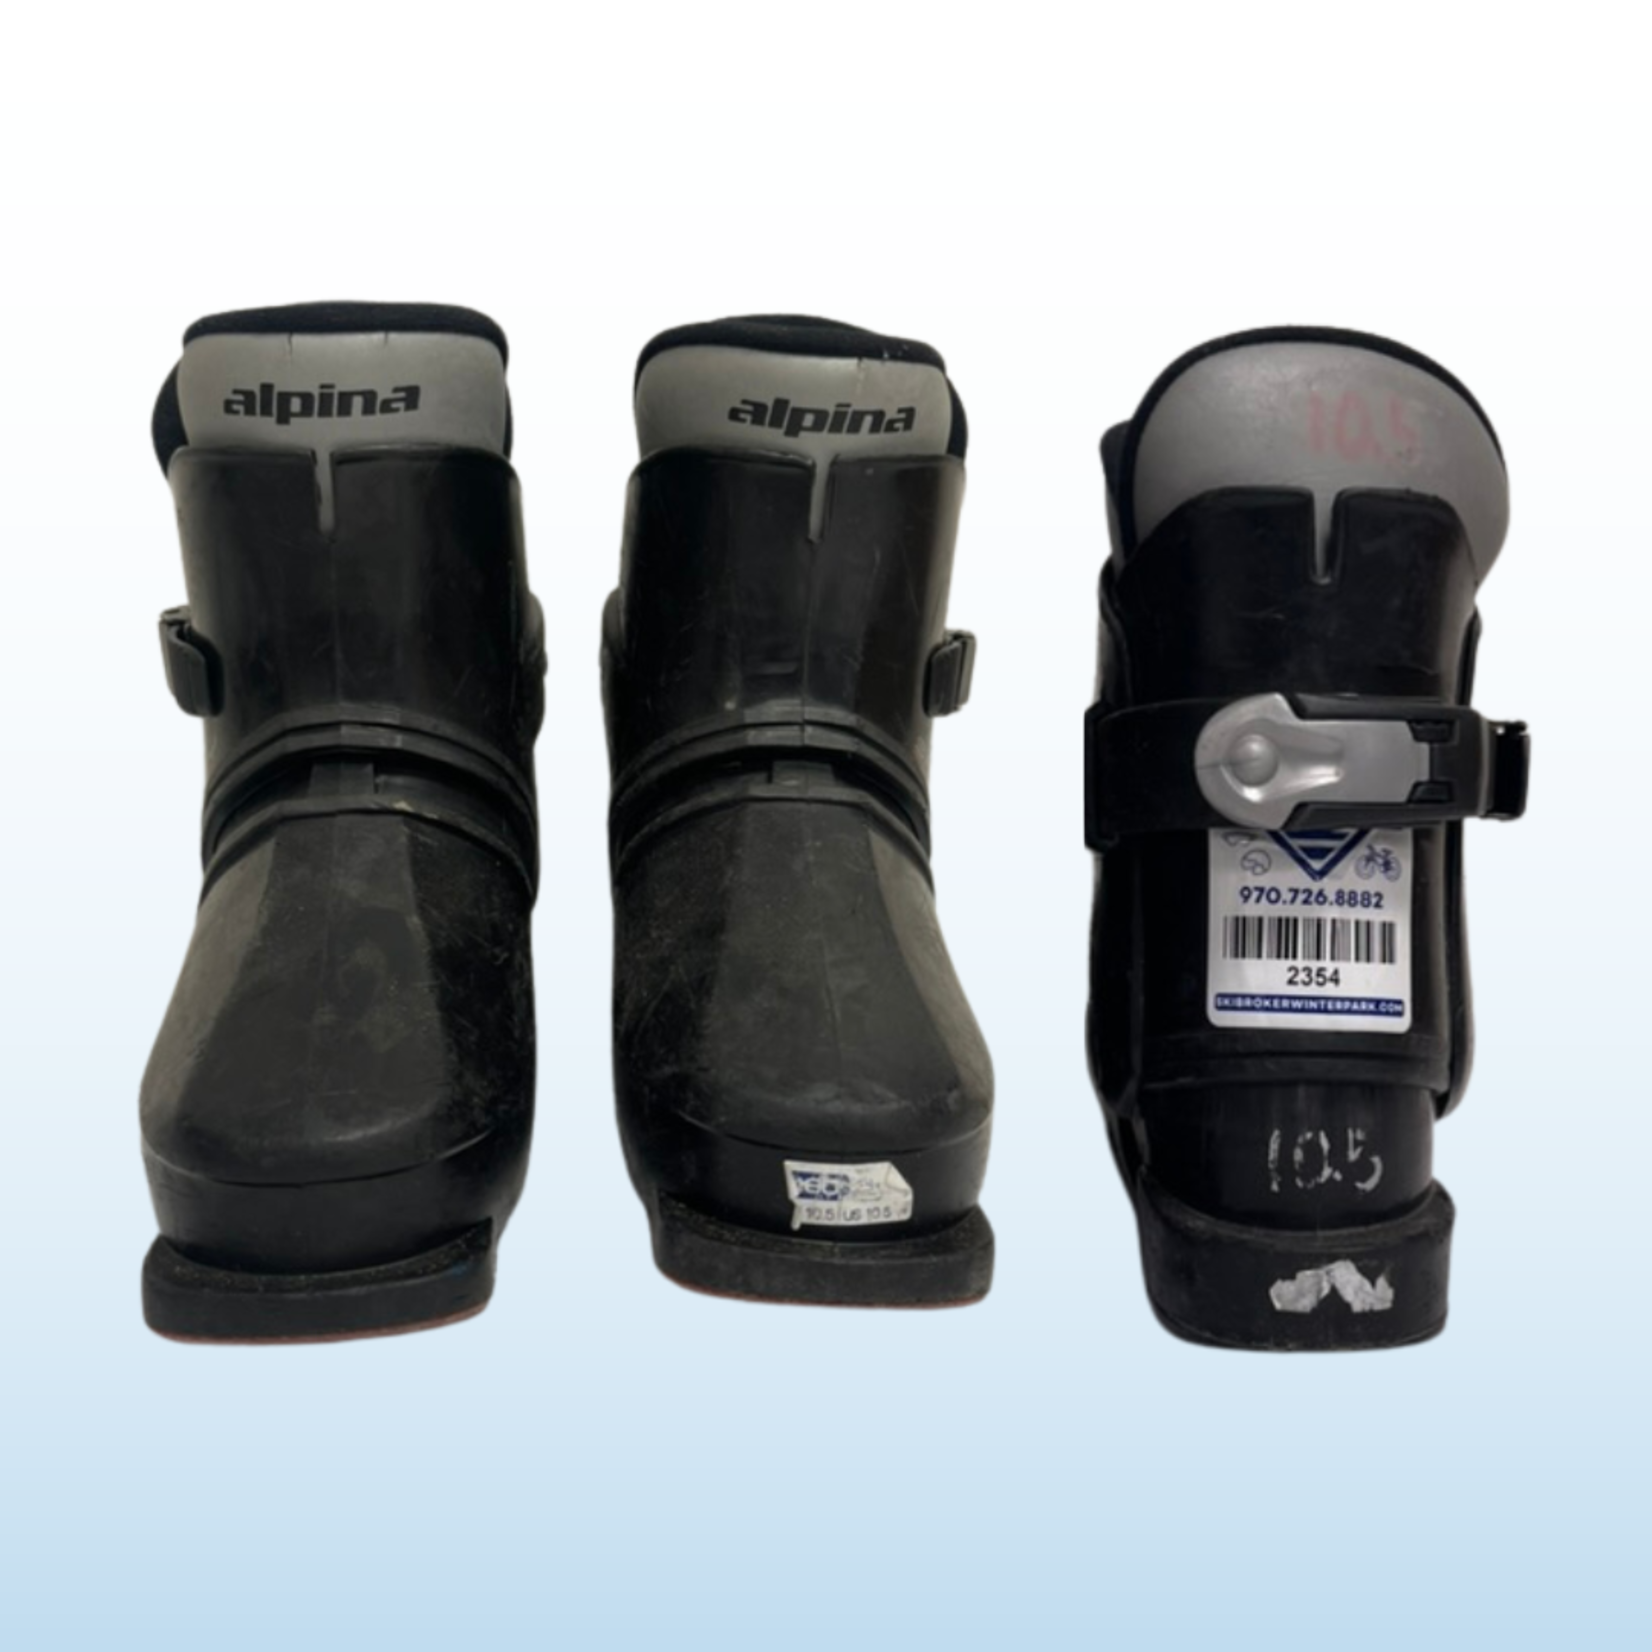 Alpina Alpina Kids Boots, Size 17.5